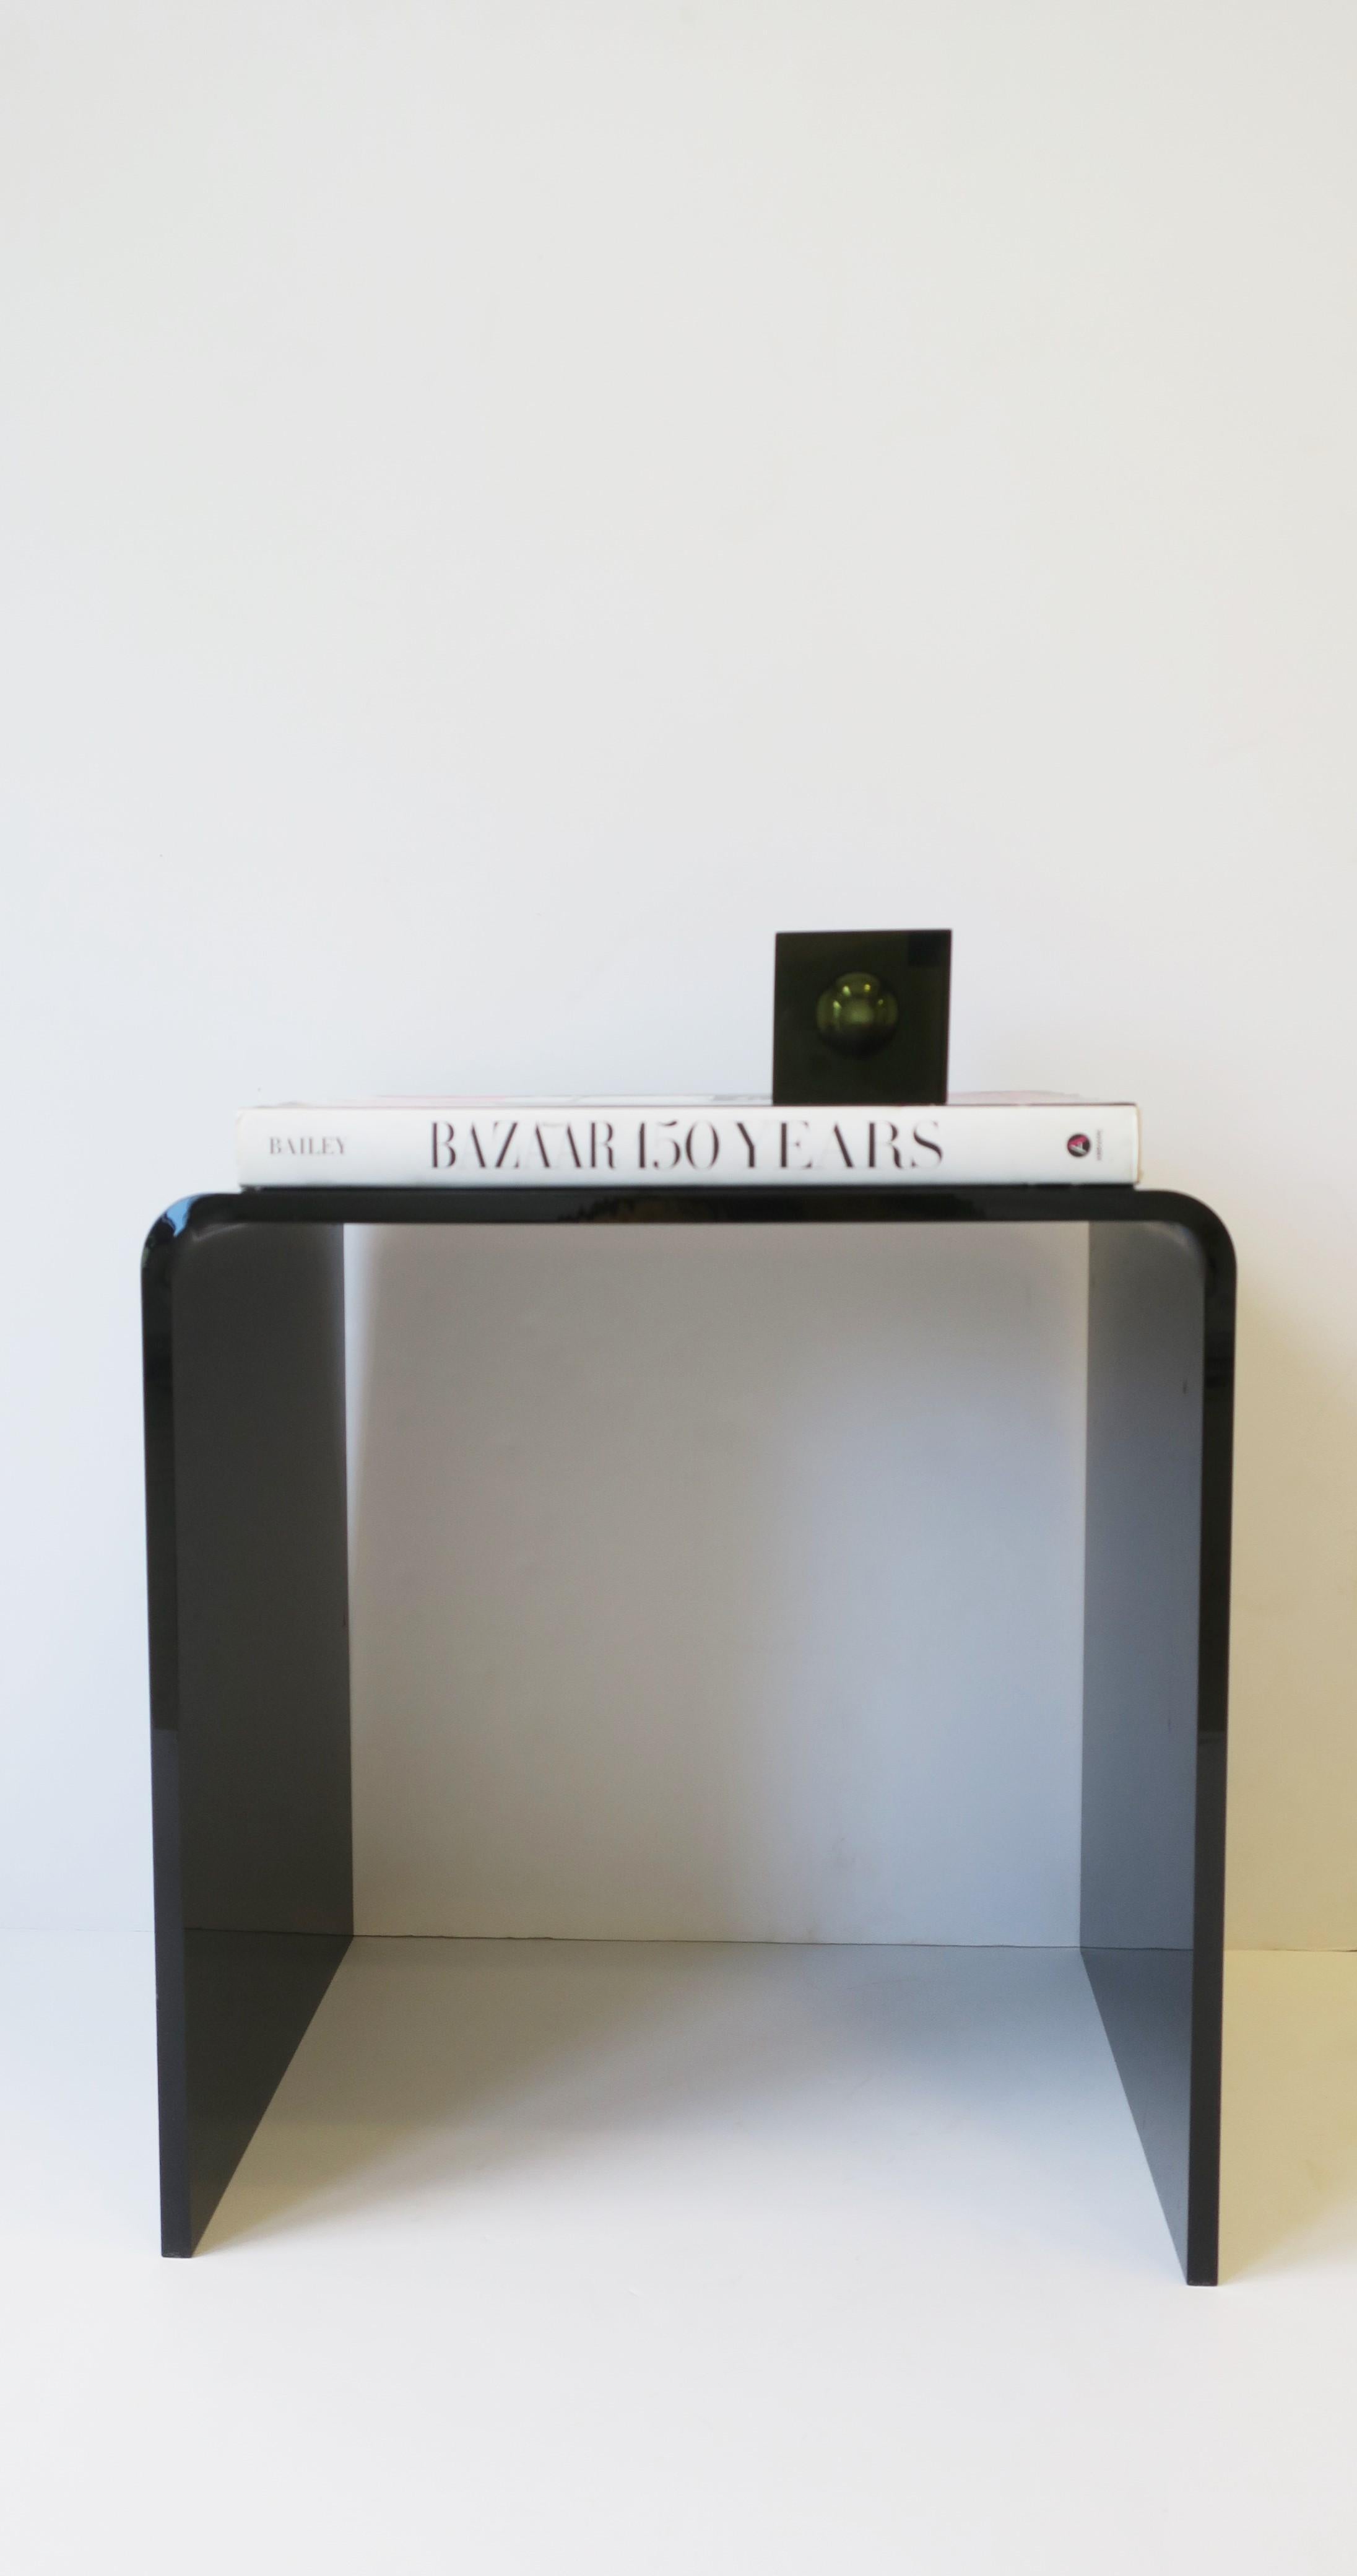 Japanese Smoked Black Crystal Cube Decorative Object 1